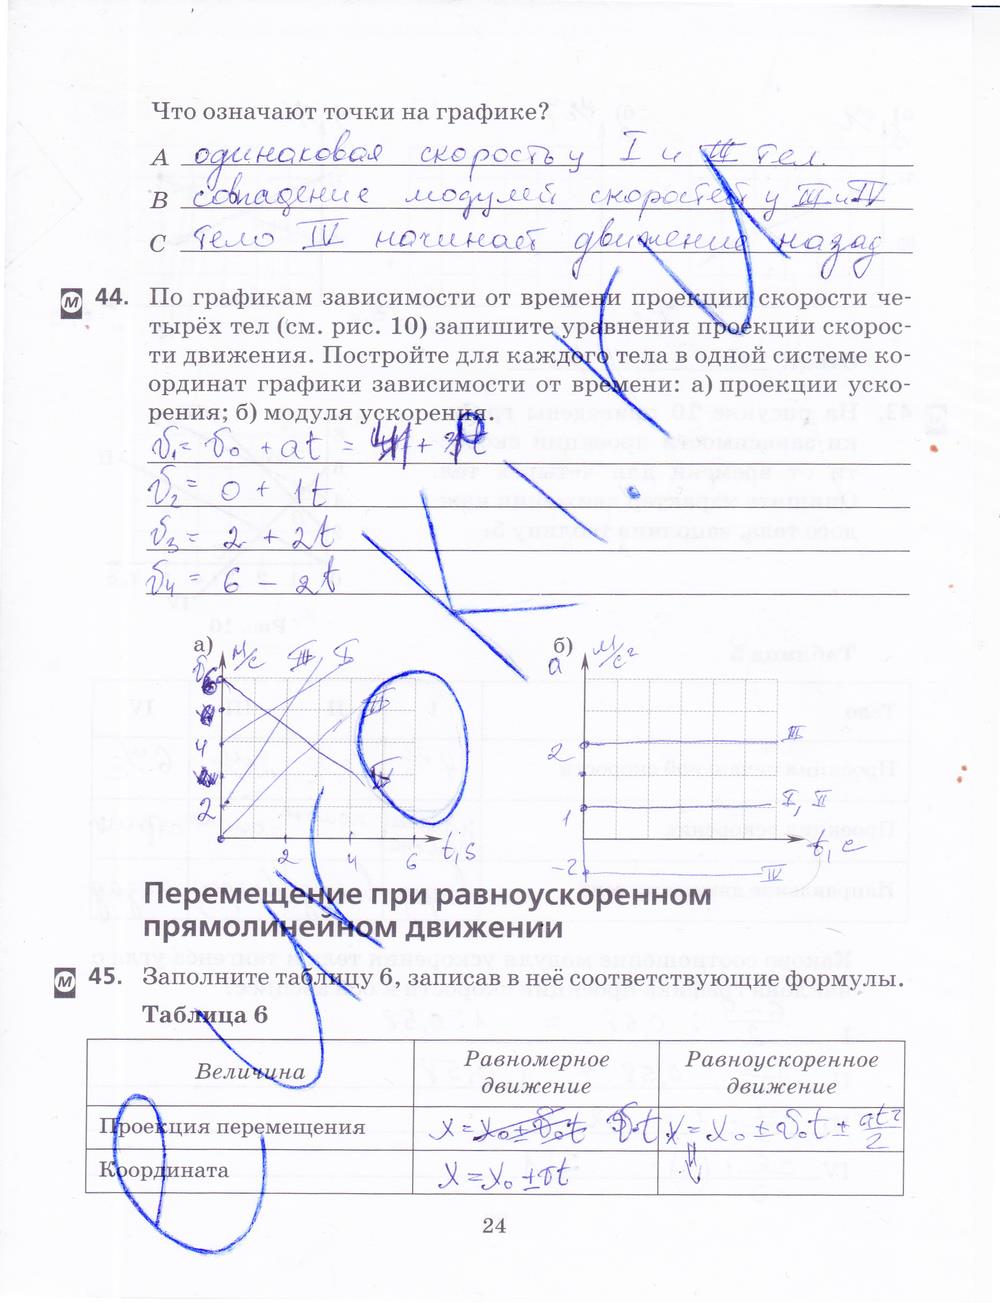 гдз 9 класс рабочая тетрадь страница 24 физика Пурышева, Важеевская, Чаругин